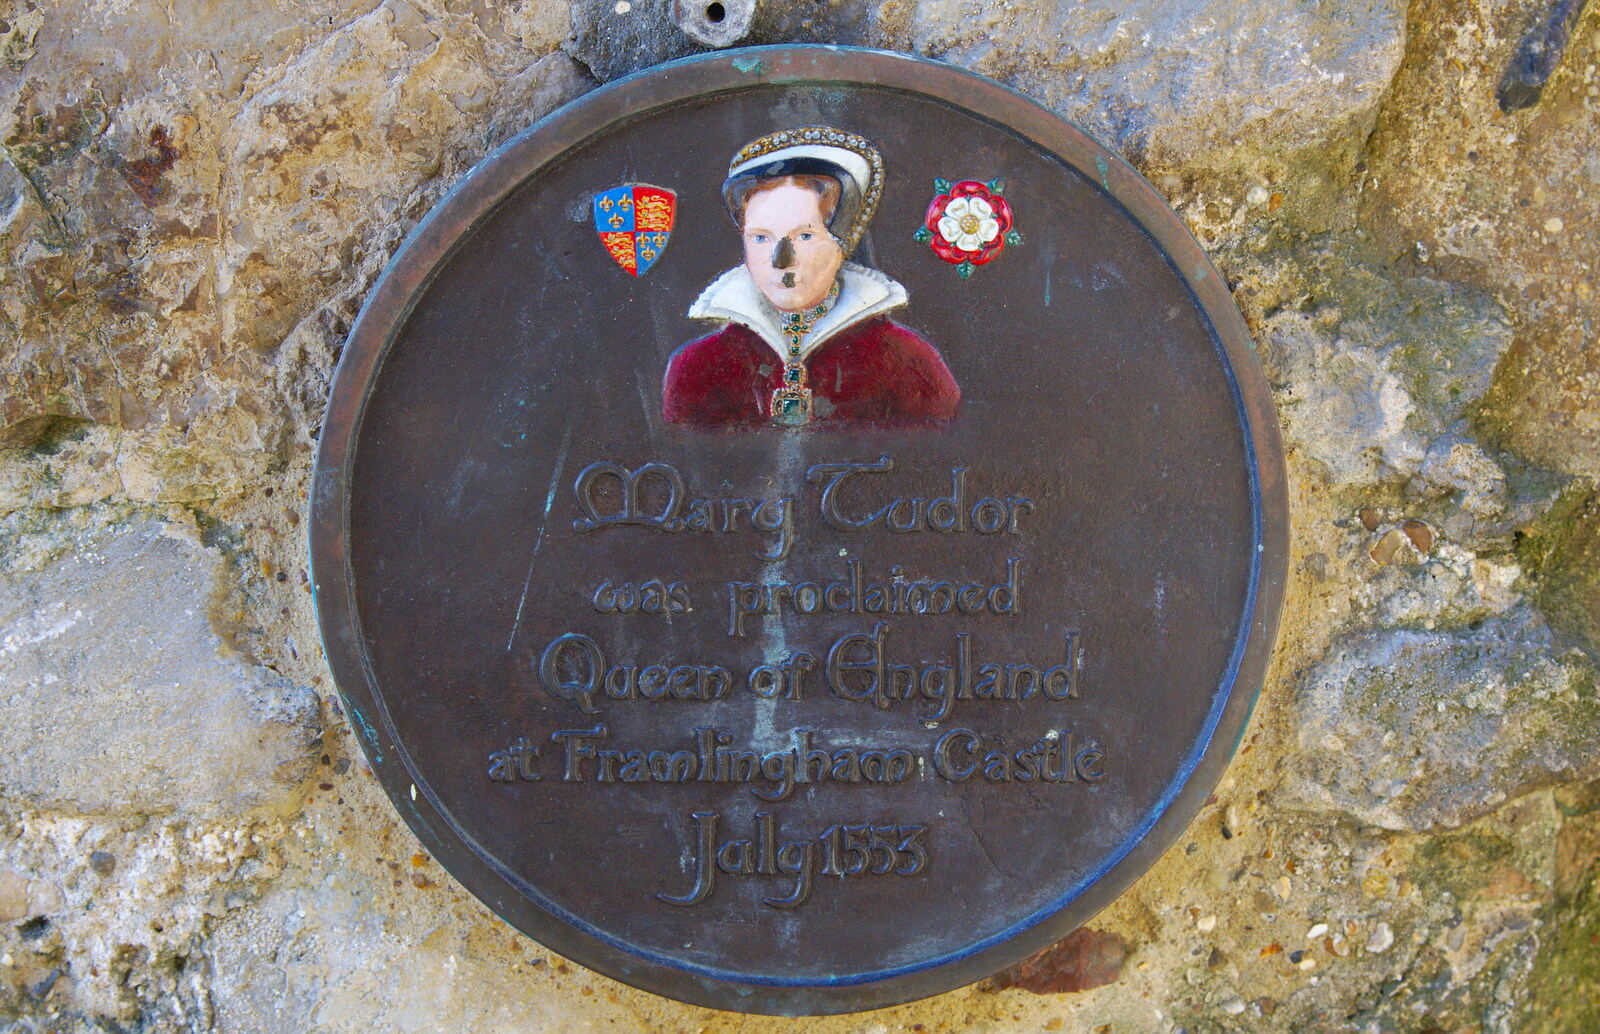 A nose-less plaque of Mary Tudor from A Trip to Framlingham Castle, Framlingham, Suffolk - 16th February 2014